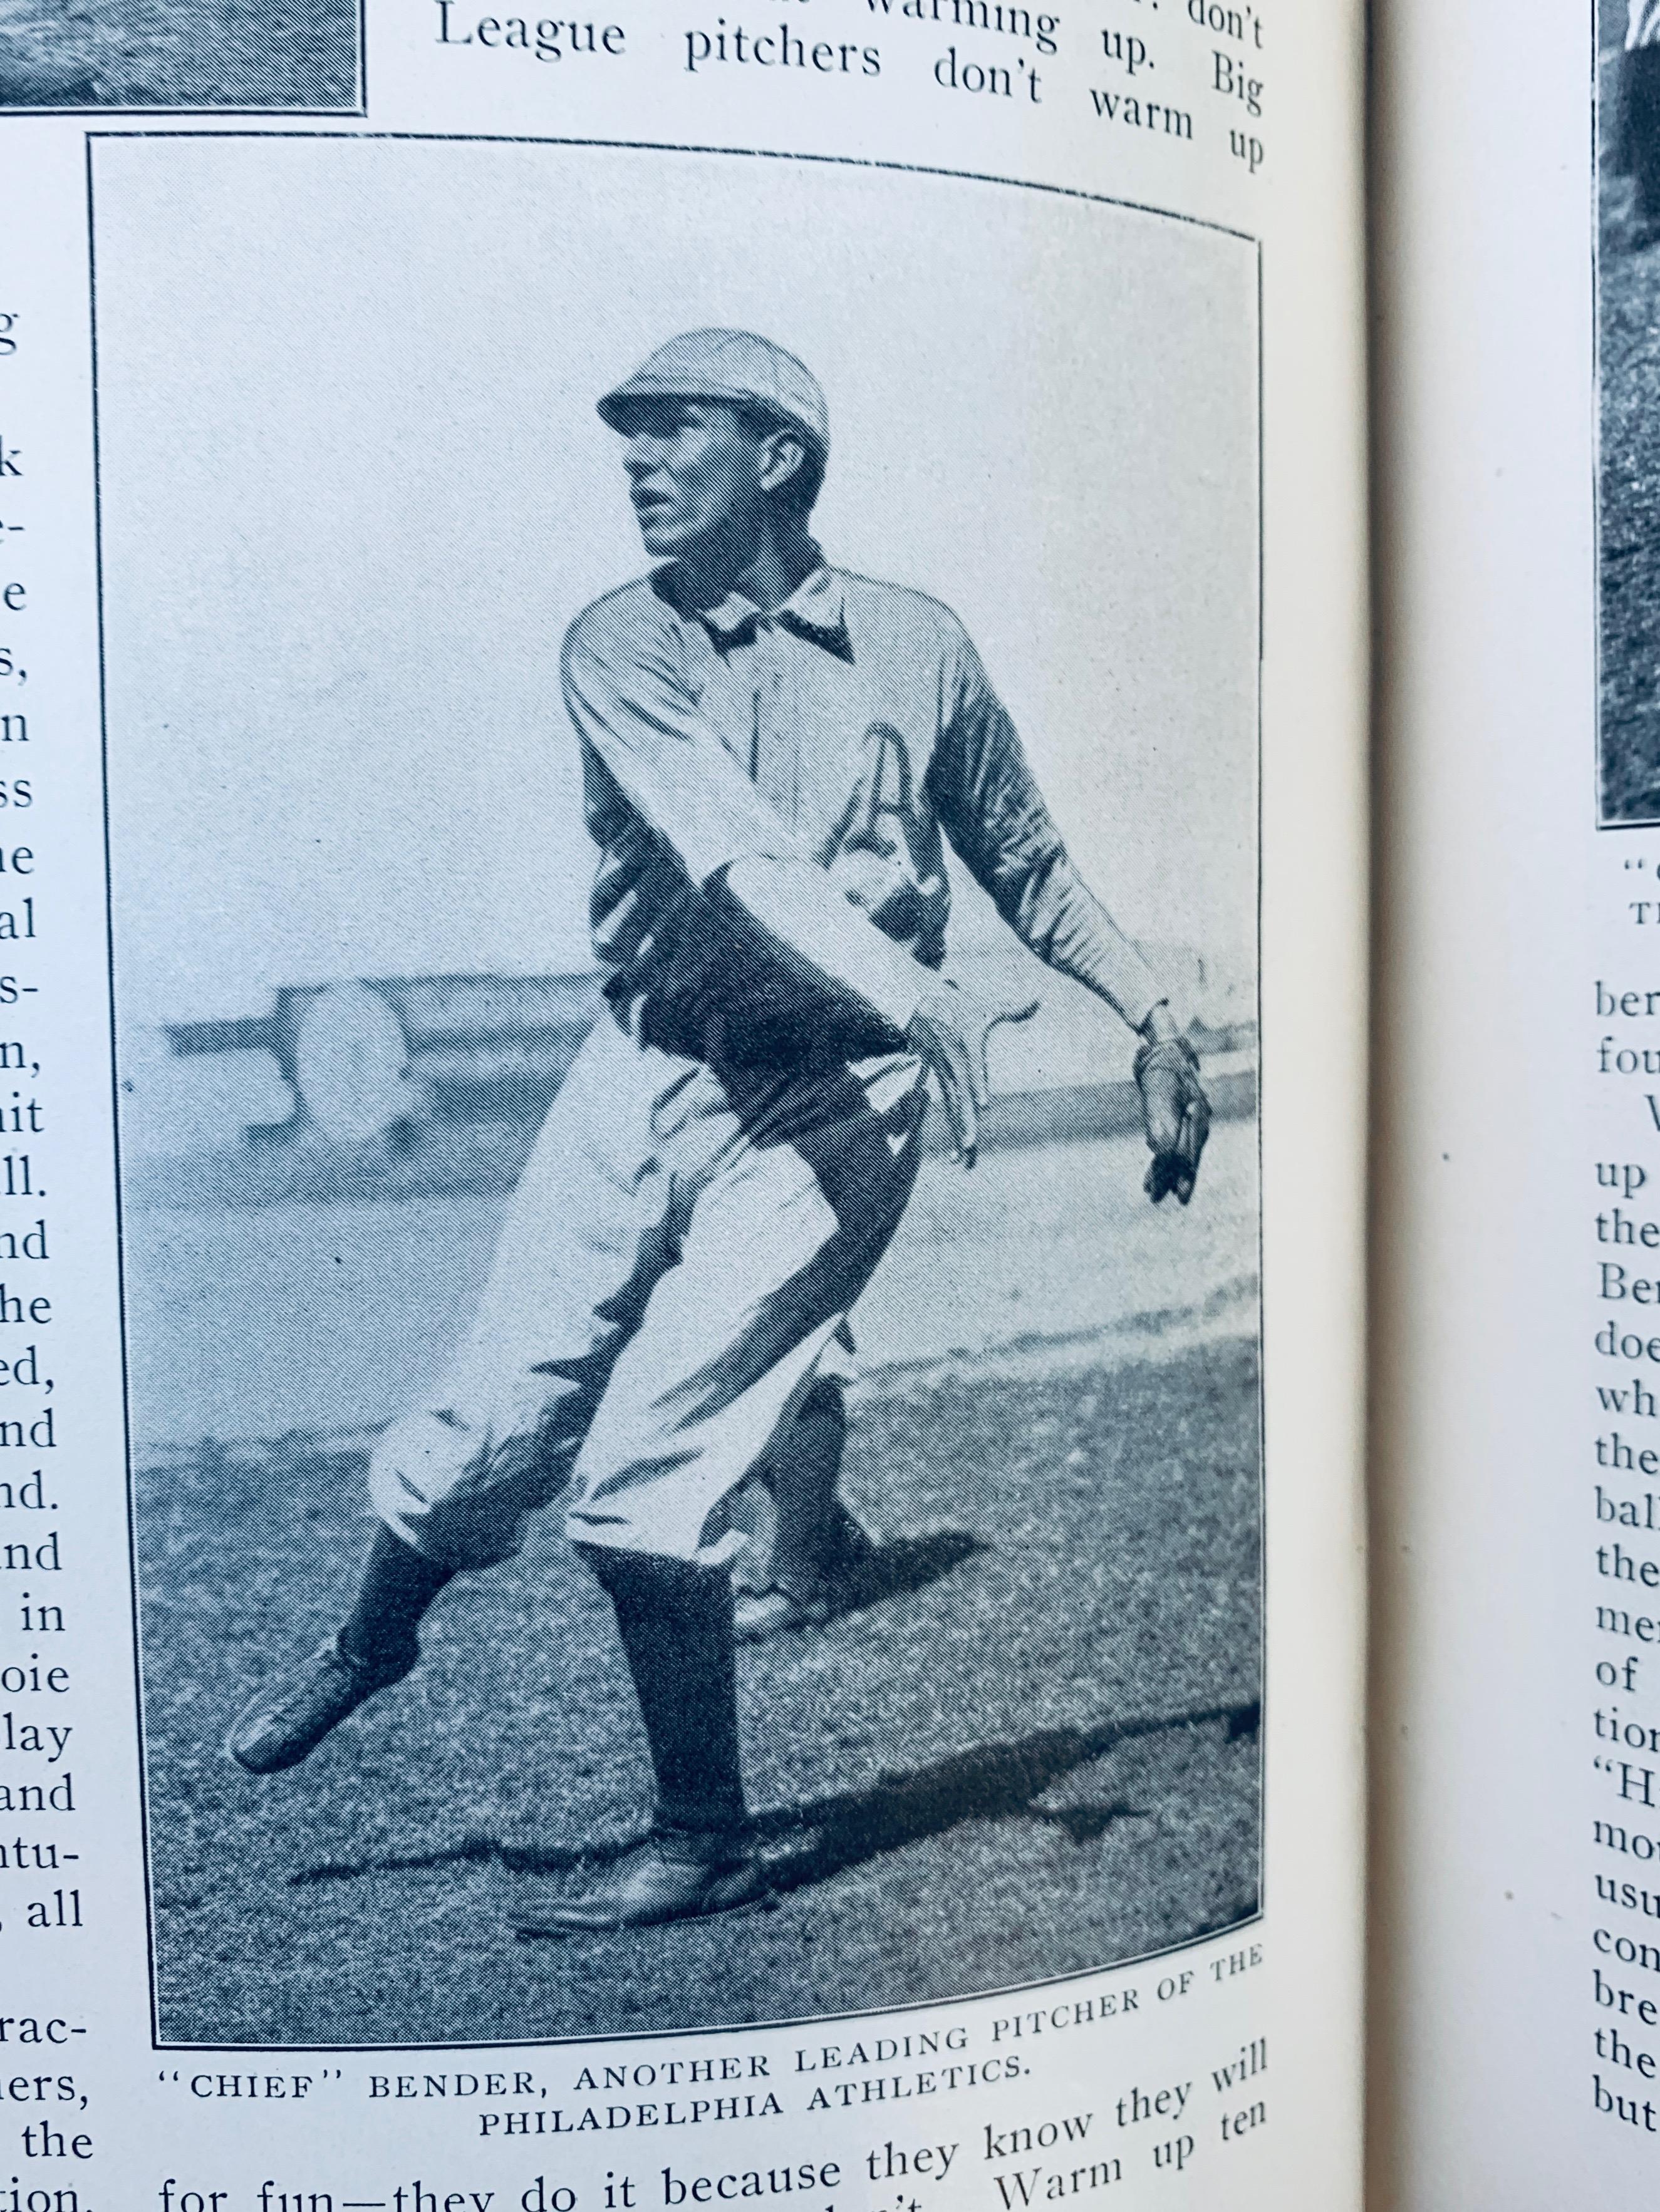 St. Nicholas Magazine Bound 1911 with EARLY BASEBALL